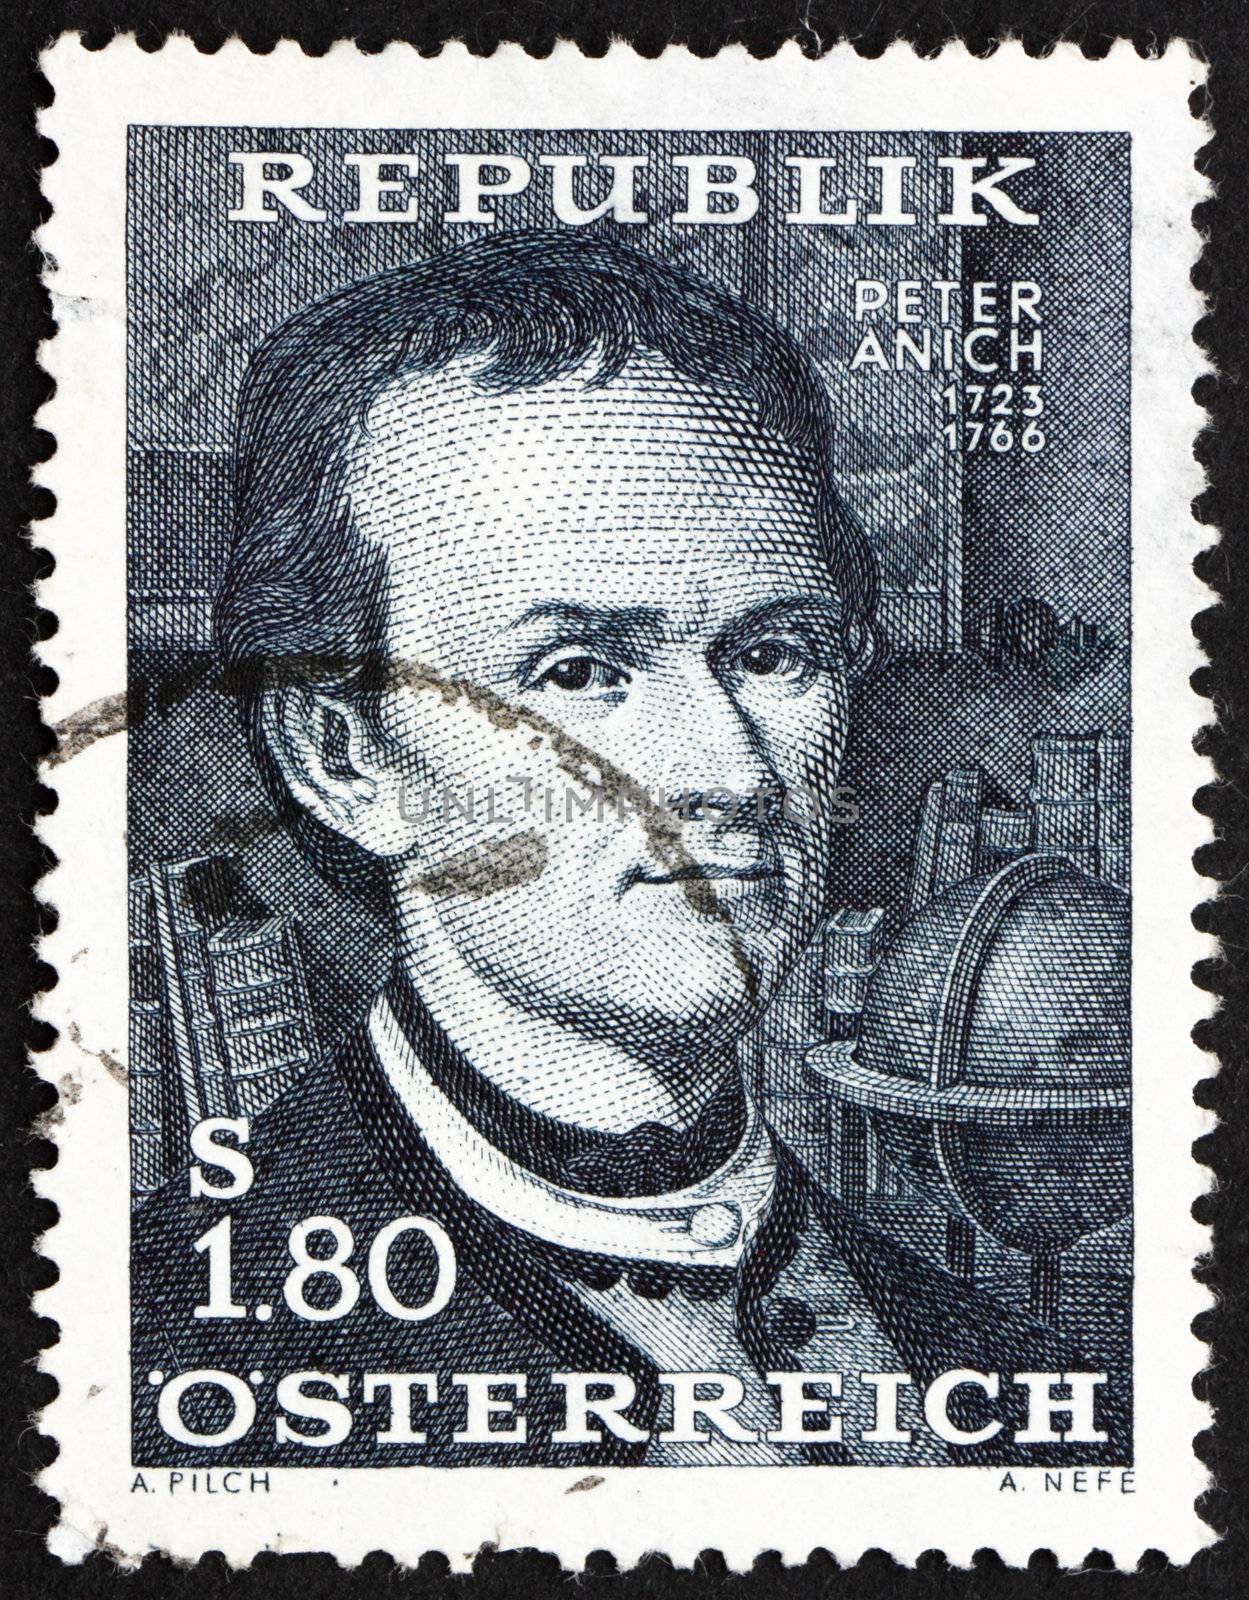 AUSTRIA - CIRCA 1966: a stamp printed in the Austria shows Peter Anich, Tirolean Cartographer and Books, circa 1966